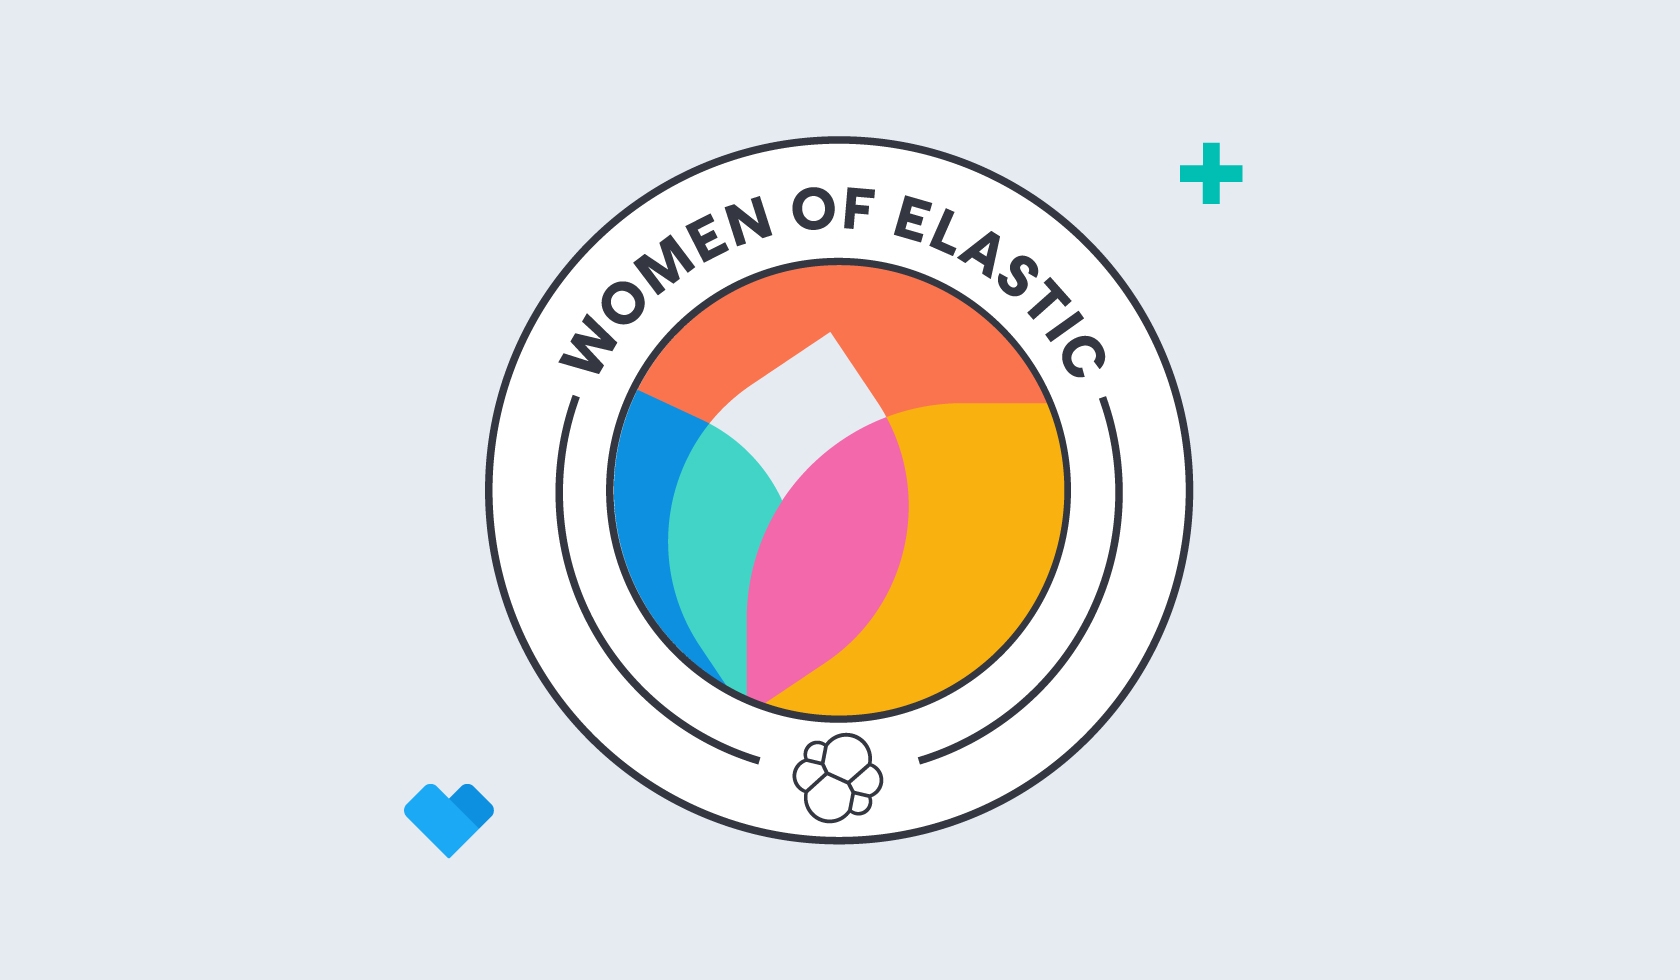 3.0-Women-of-Elastic-blog-1680x980.jpg